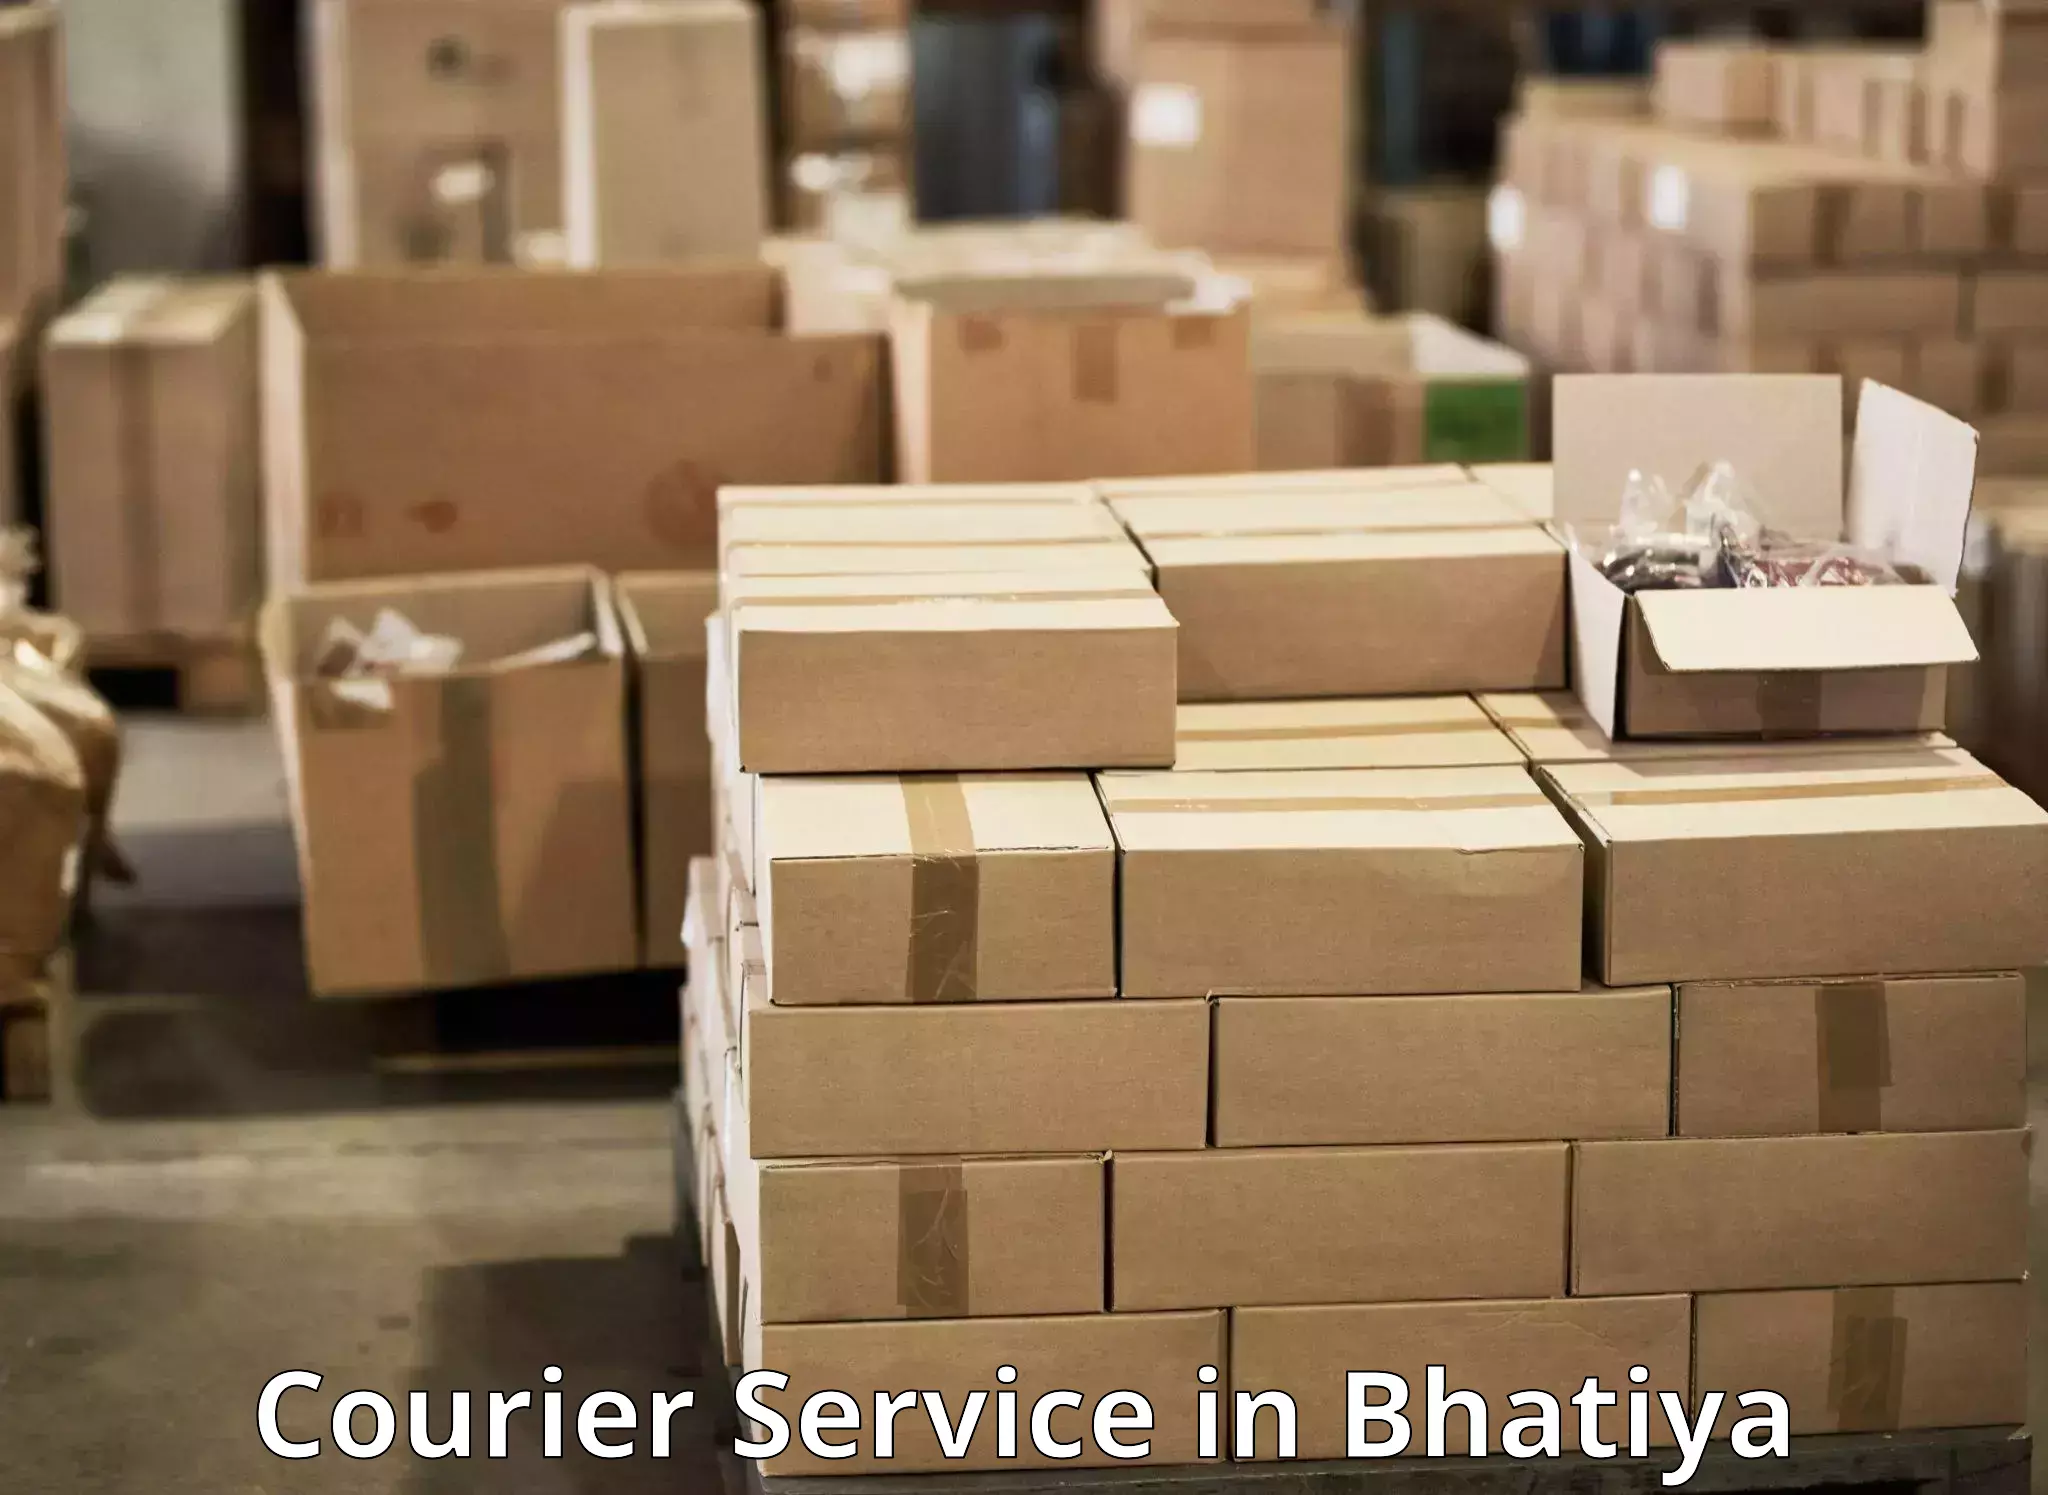 On-demand shipping options in Bhatiya